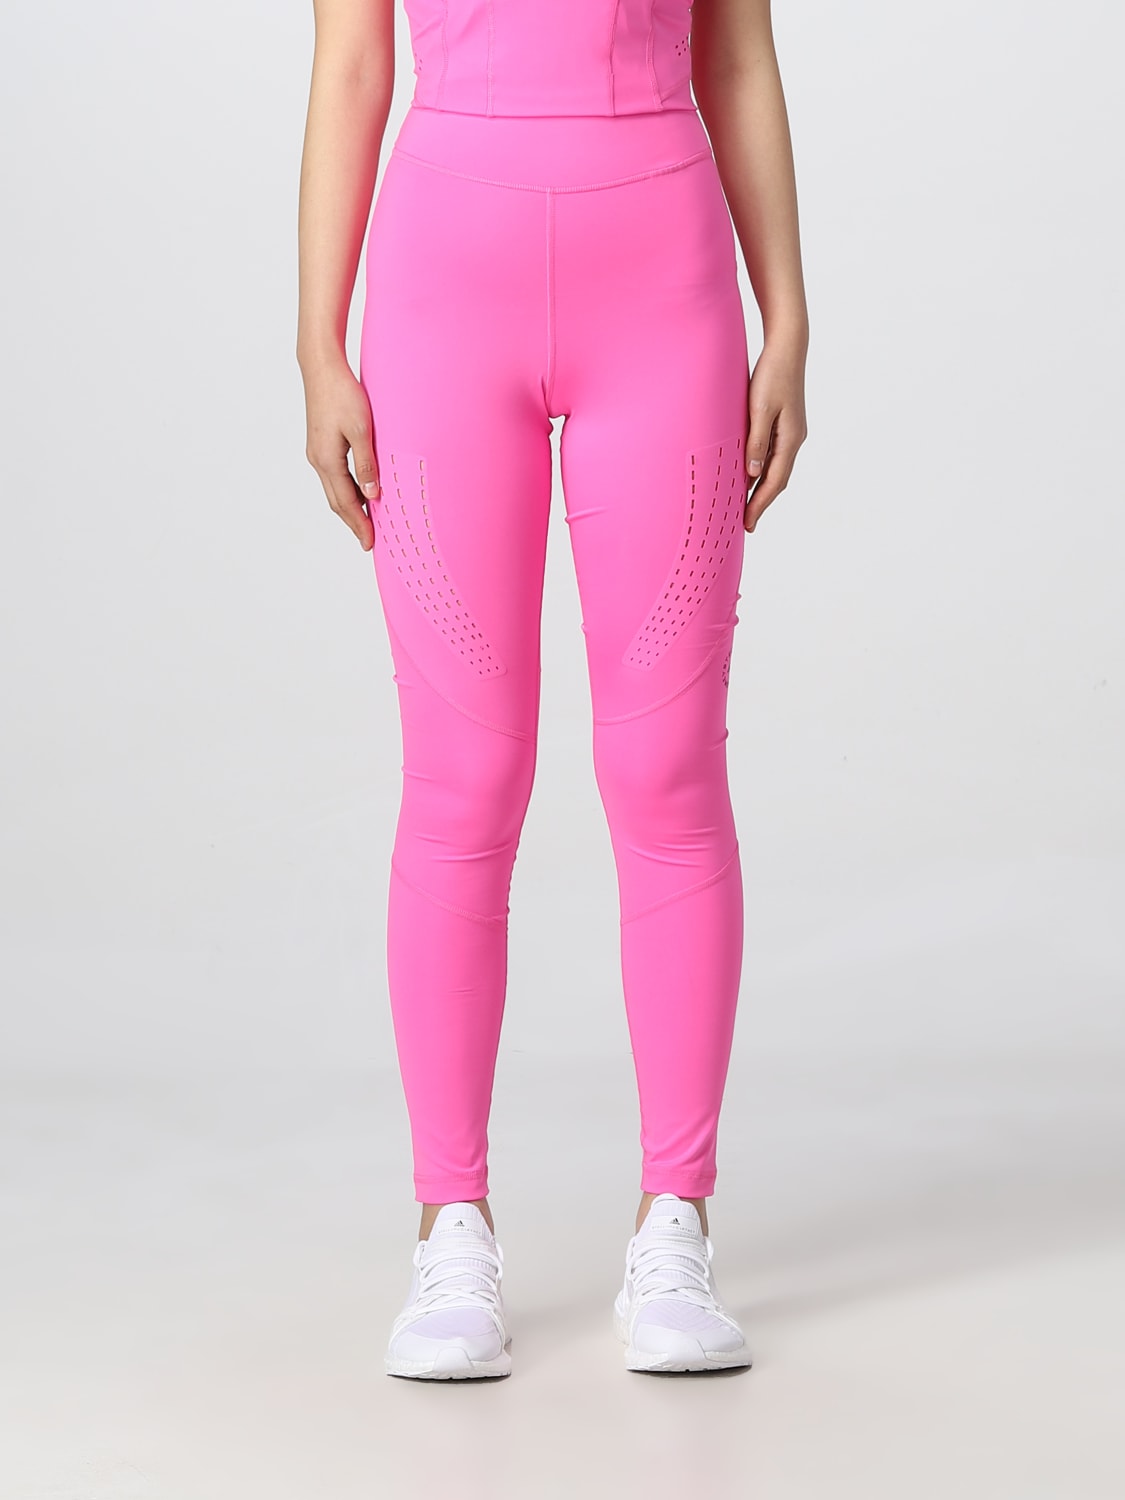 ADIDAS BY STELLA MCCARTNEY: pants for woman - Pink  Adidas By Stella  Mccartney pants HS1735 online at